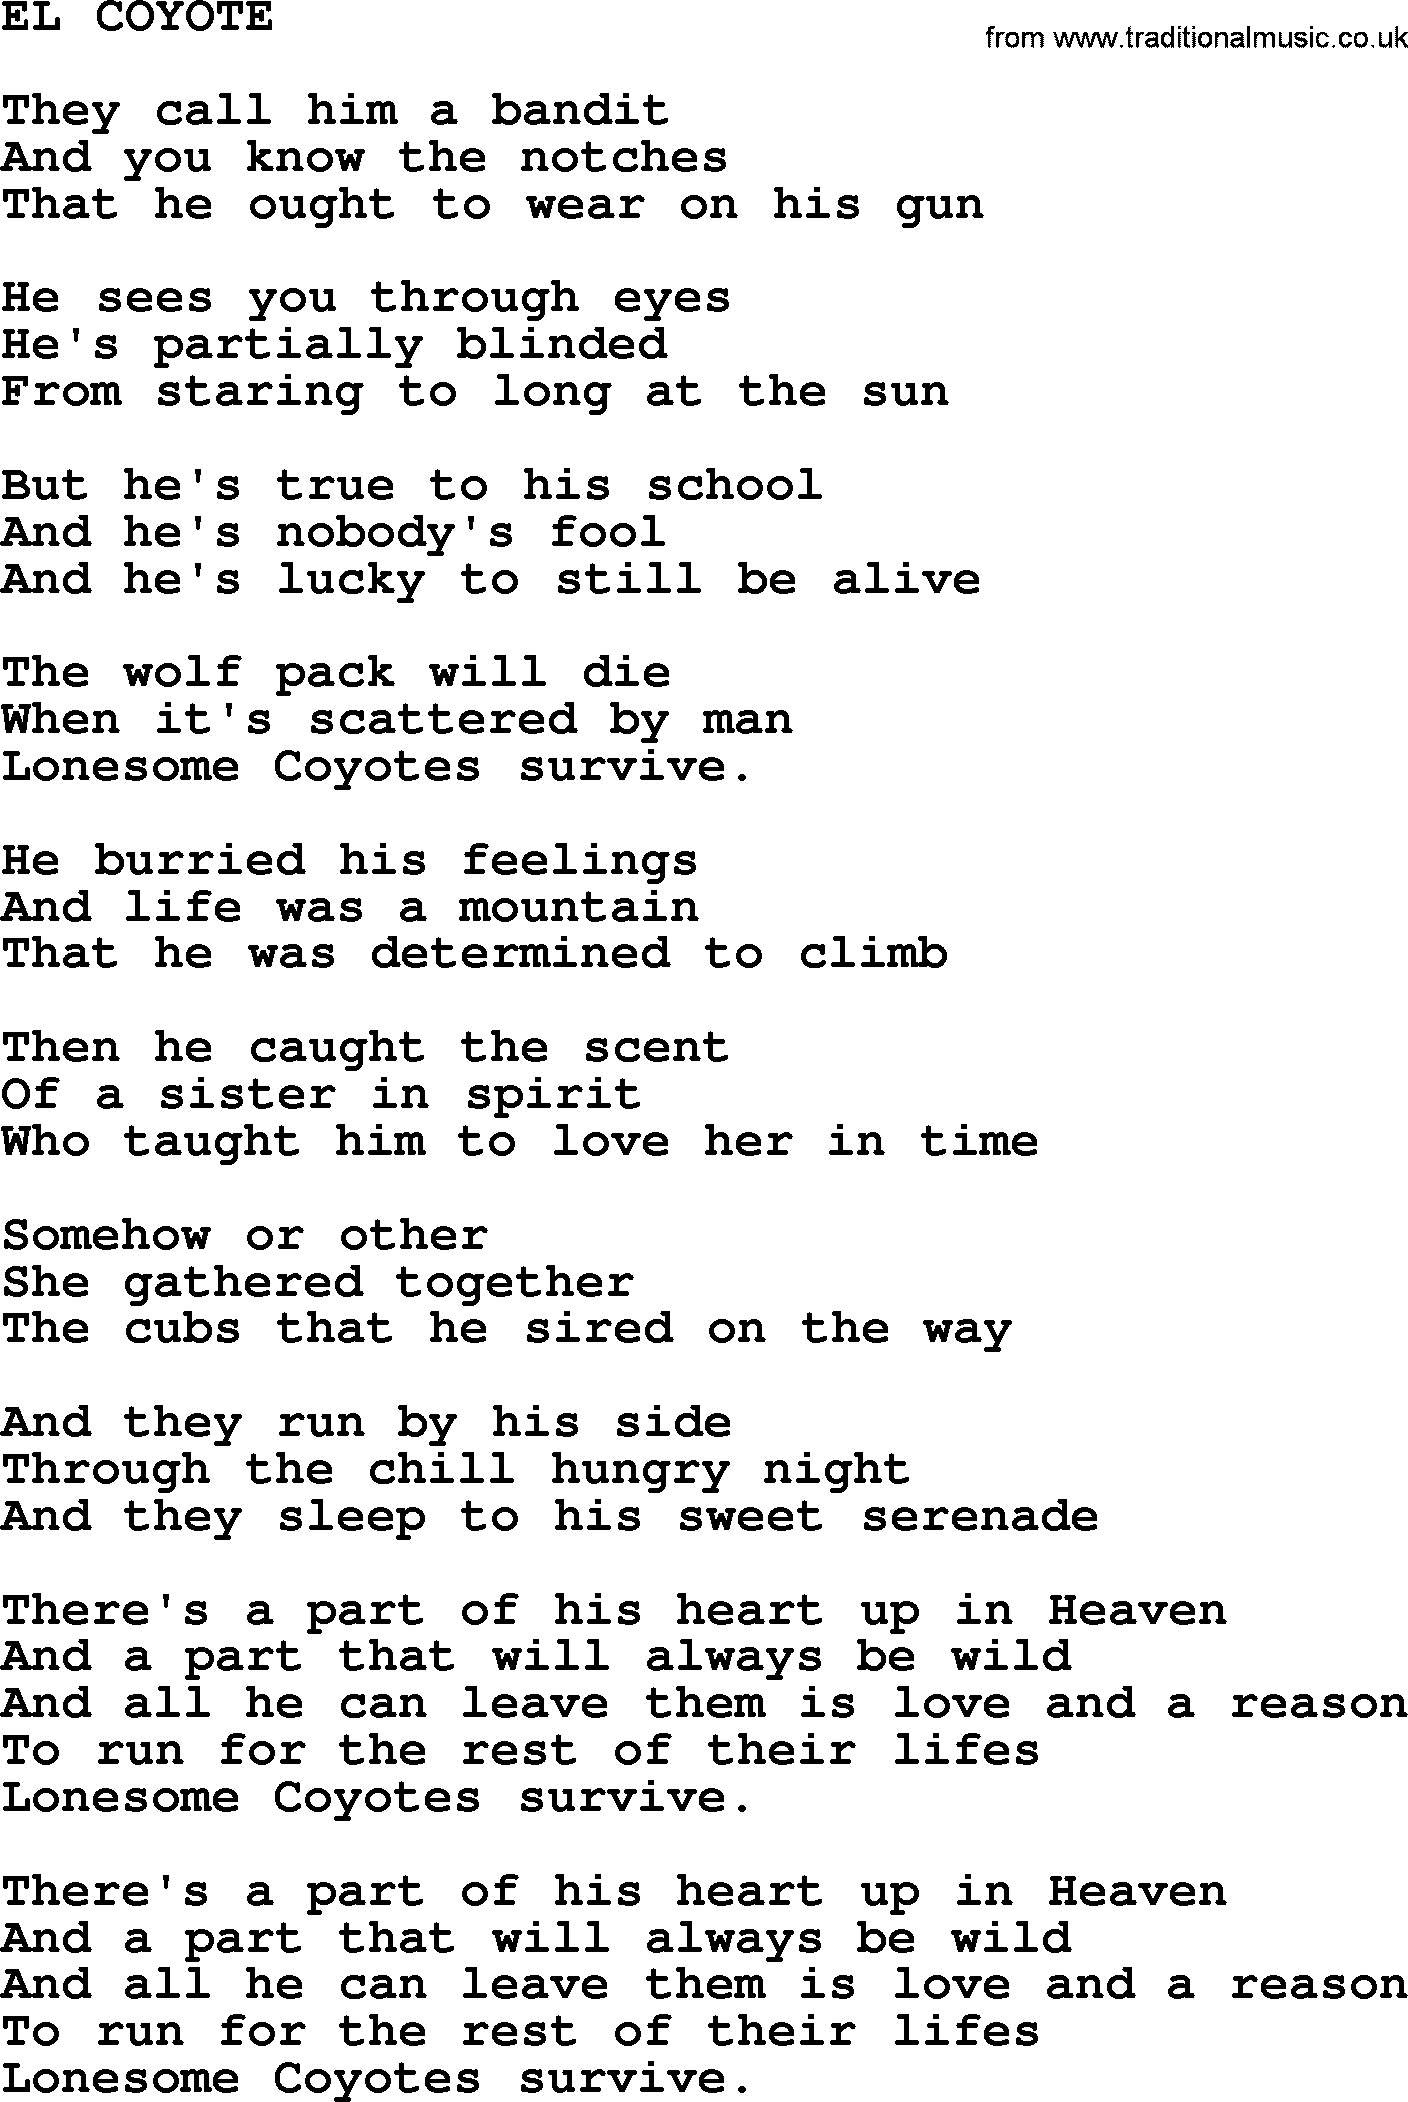 Kris Kristofferson song: El Coyote lyrics